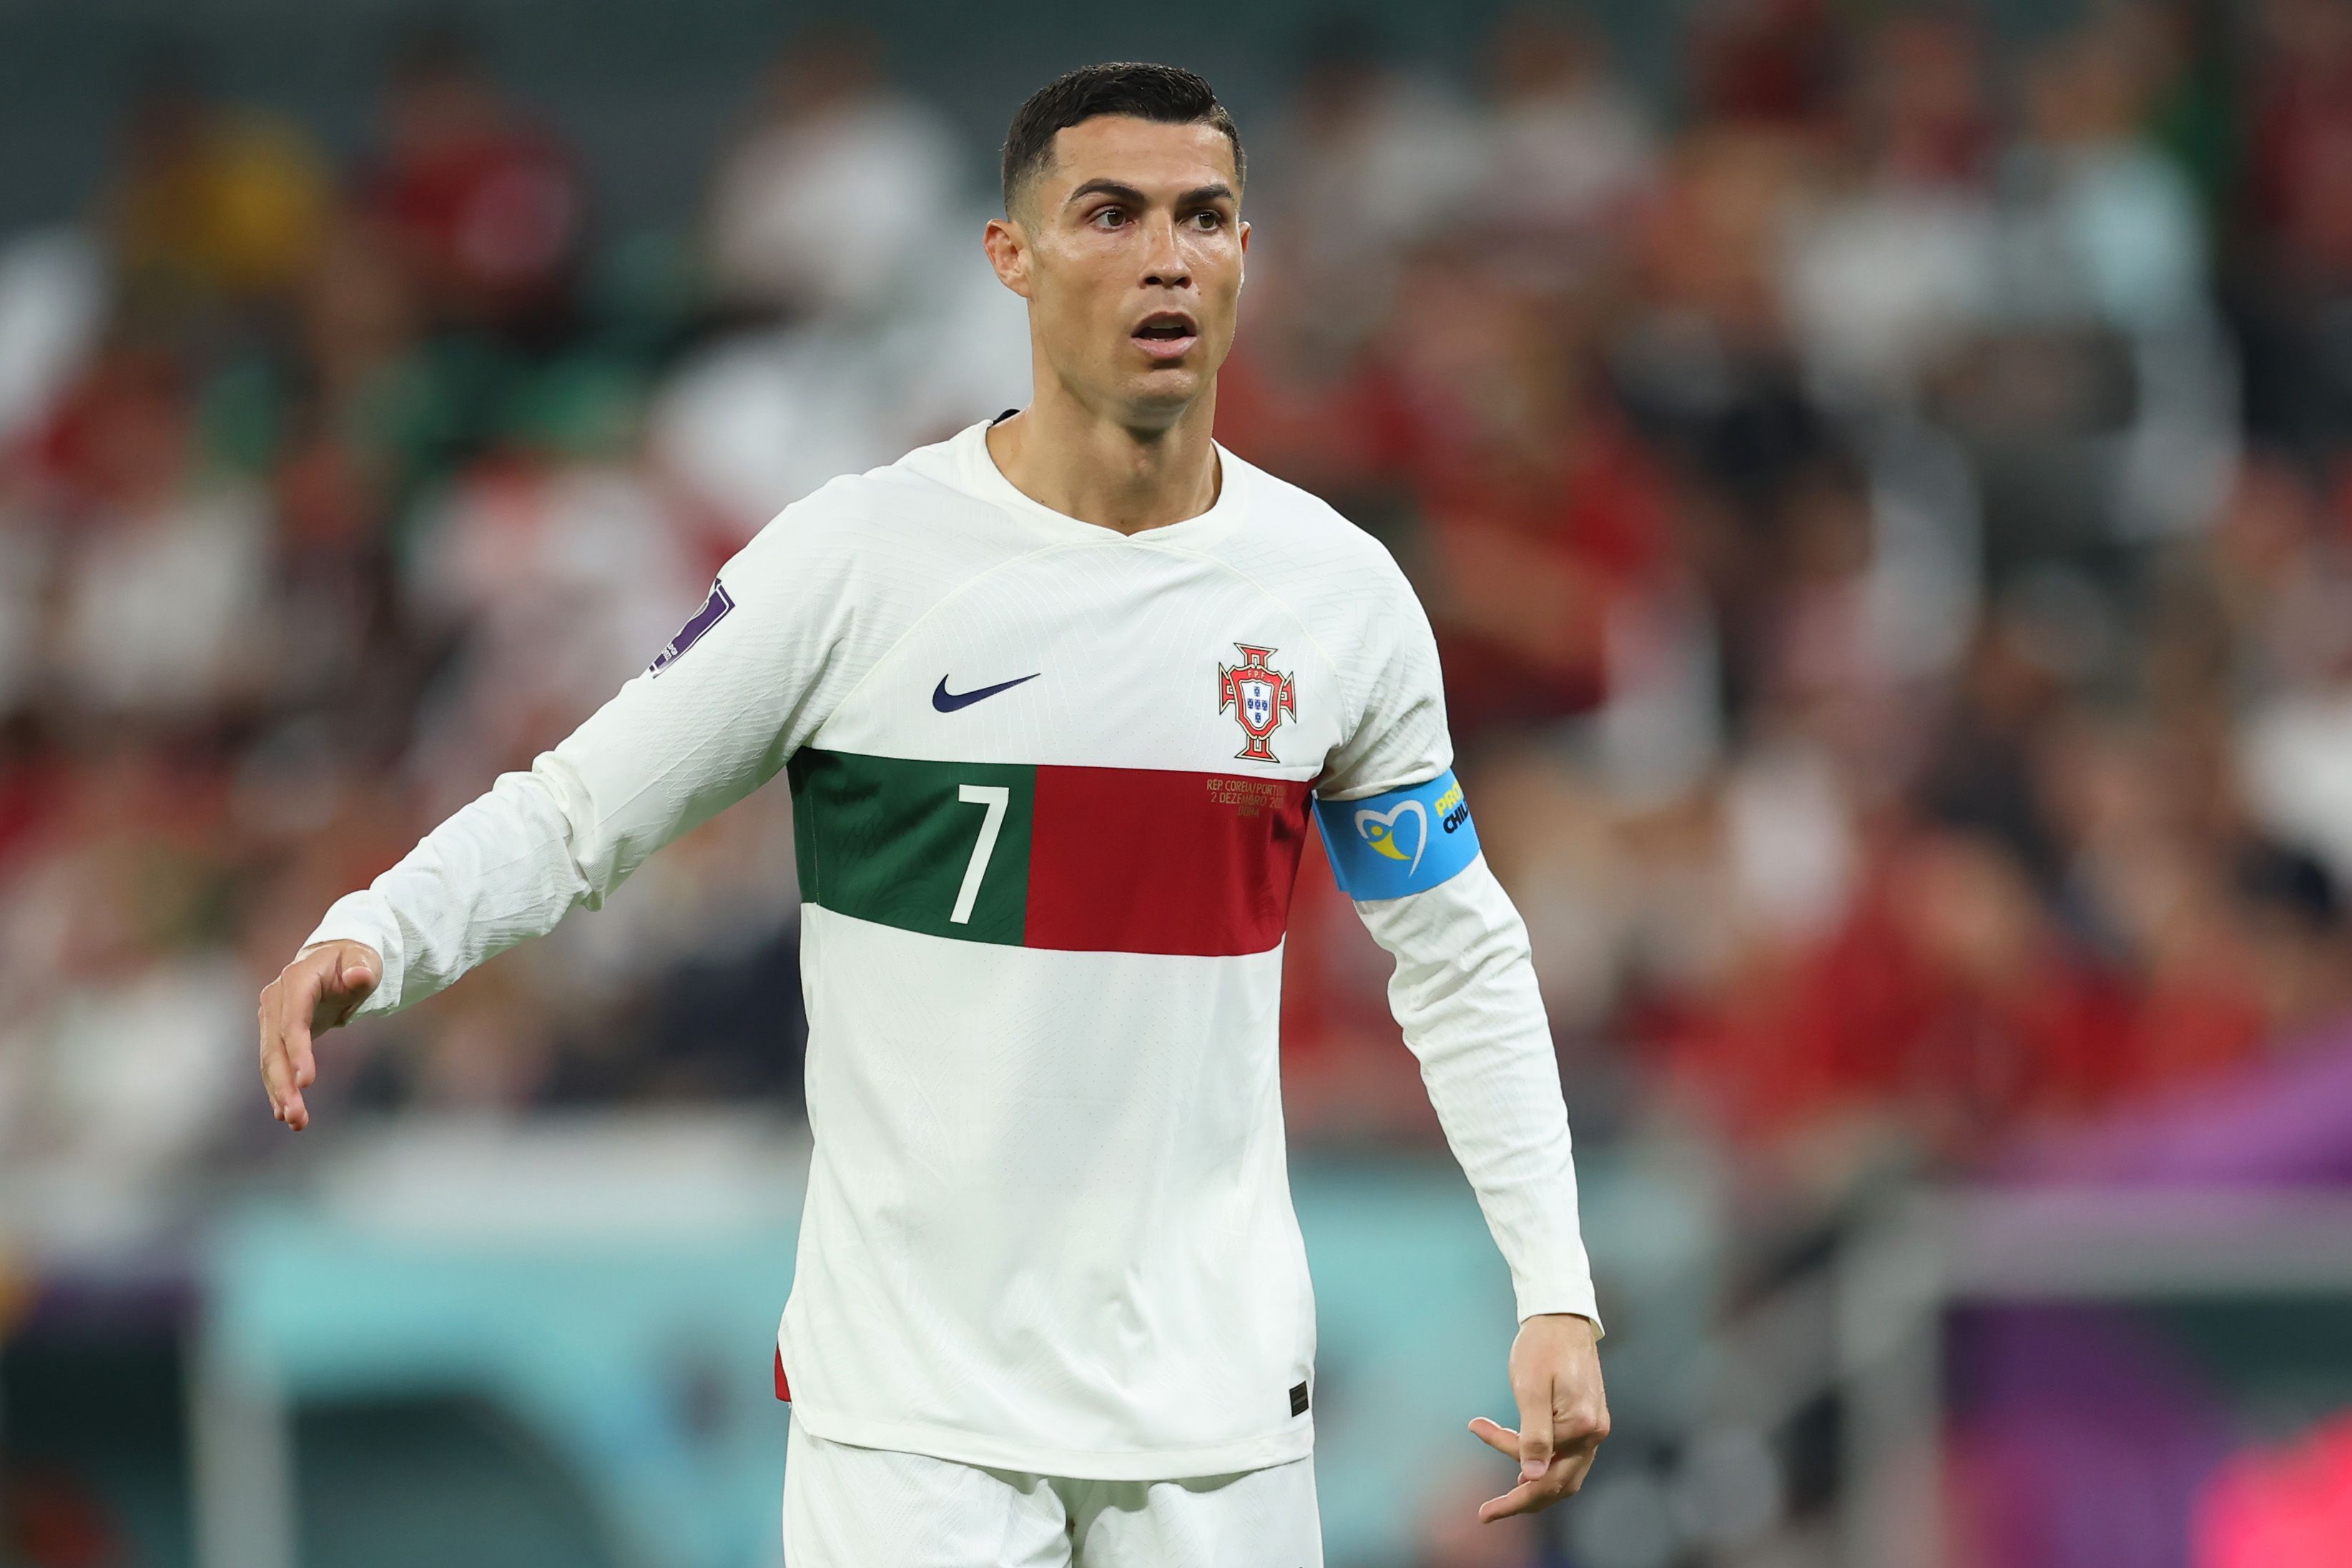 Cristiano Ronaldo could make his Al-Nassr debut on January 5